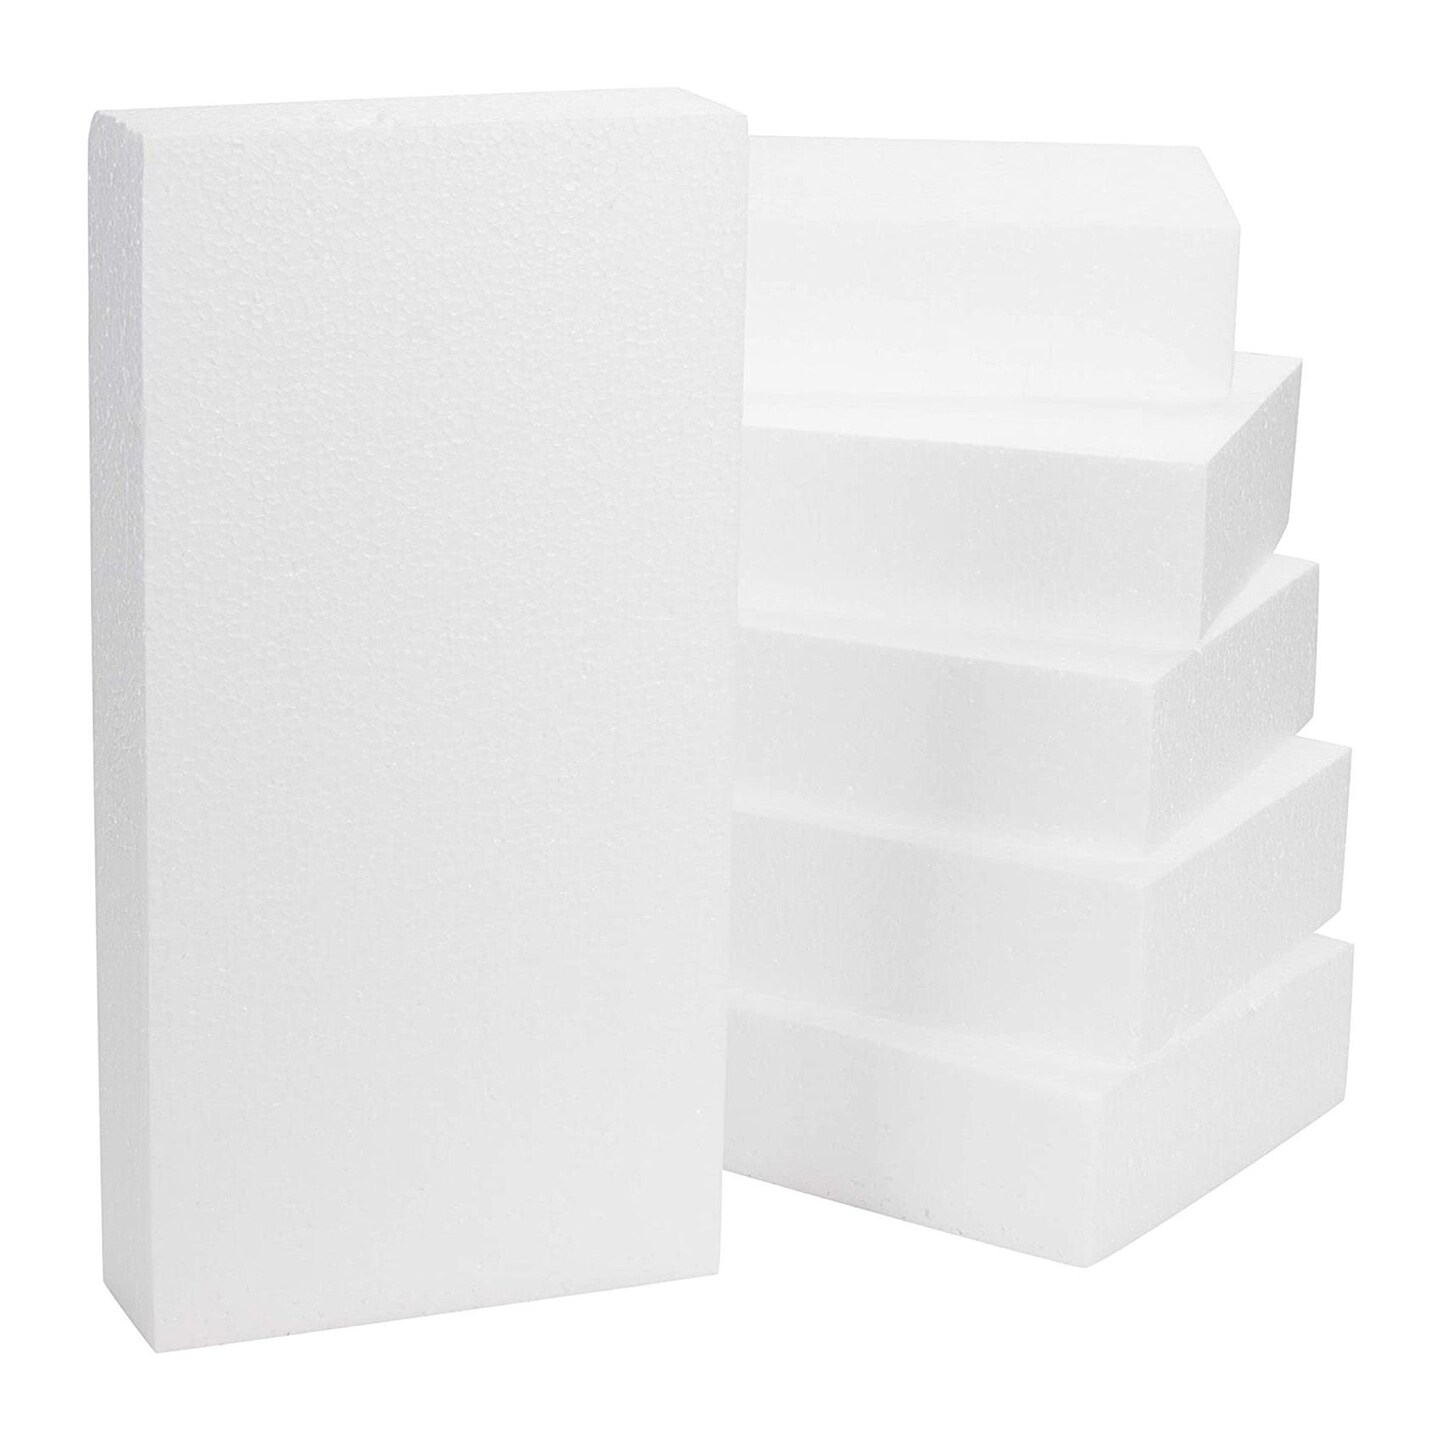  Juvale 12 Pack Foam Blocks For Crafts, Polystyrene